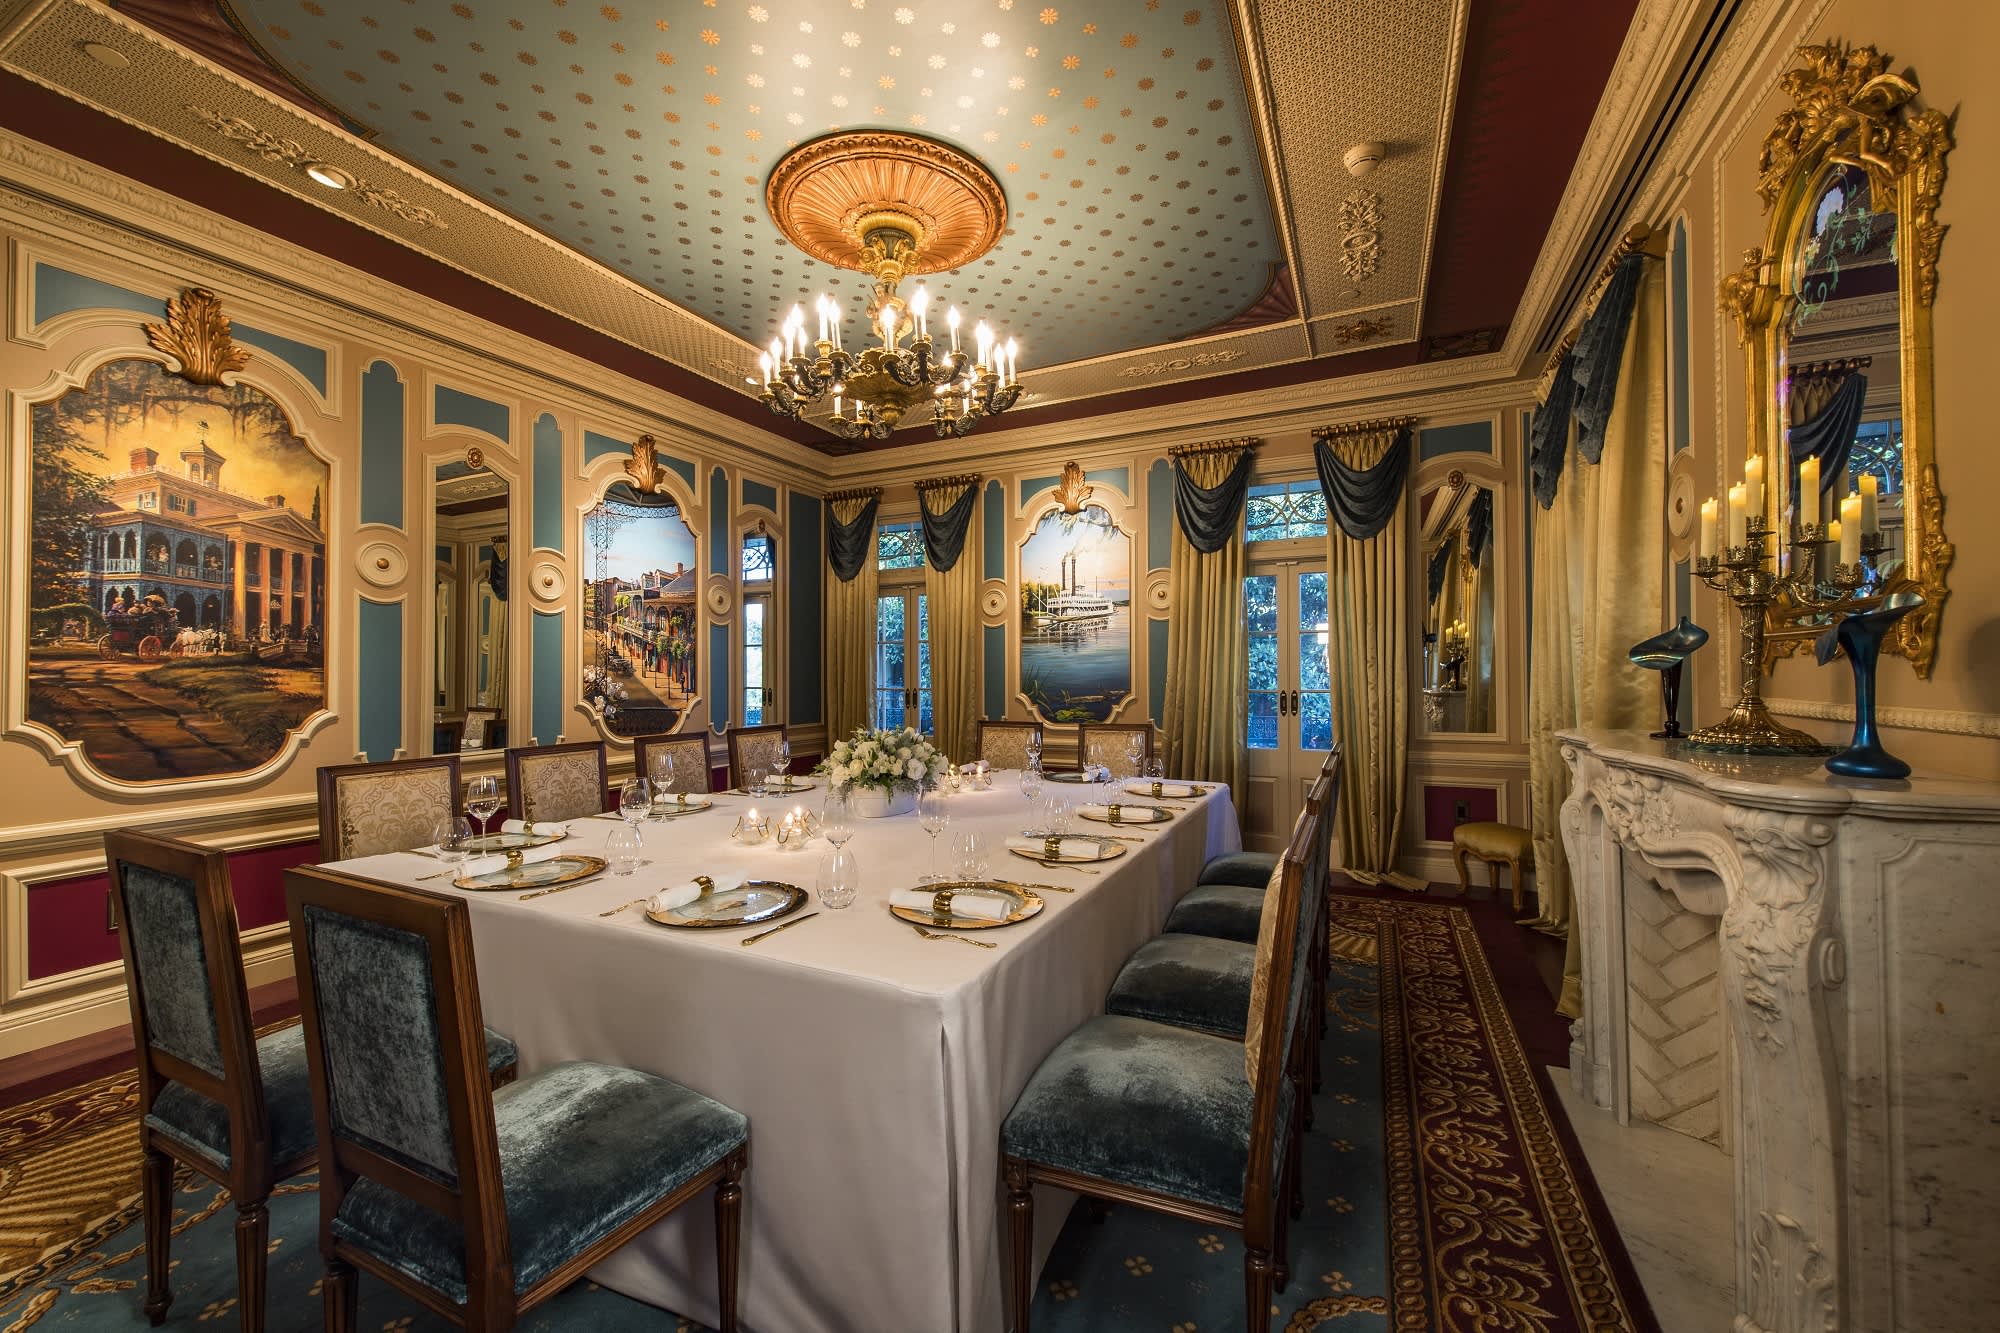 Photos: Secret Disneyland dinner costs $15,000